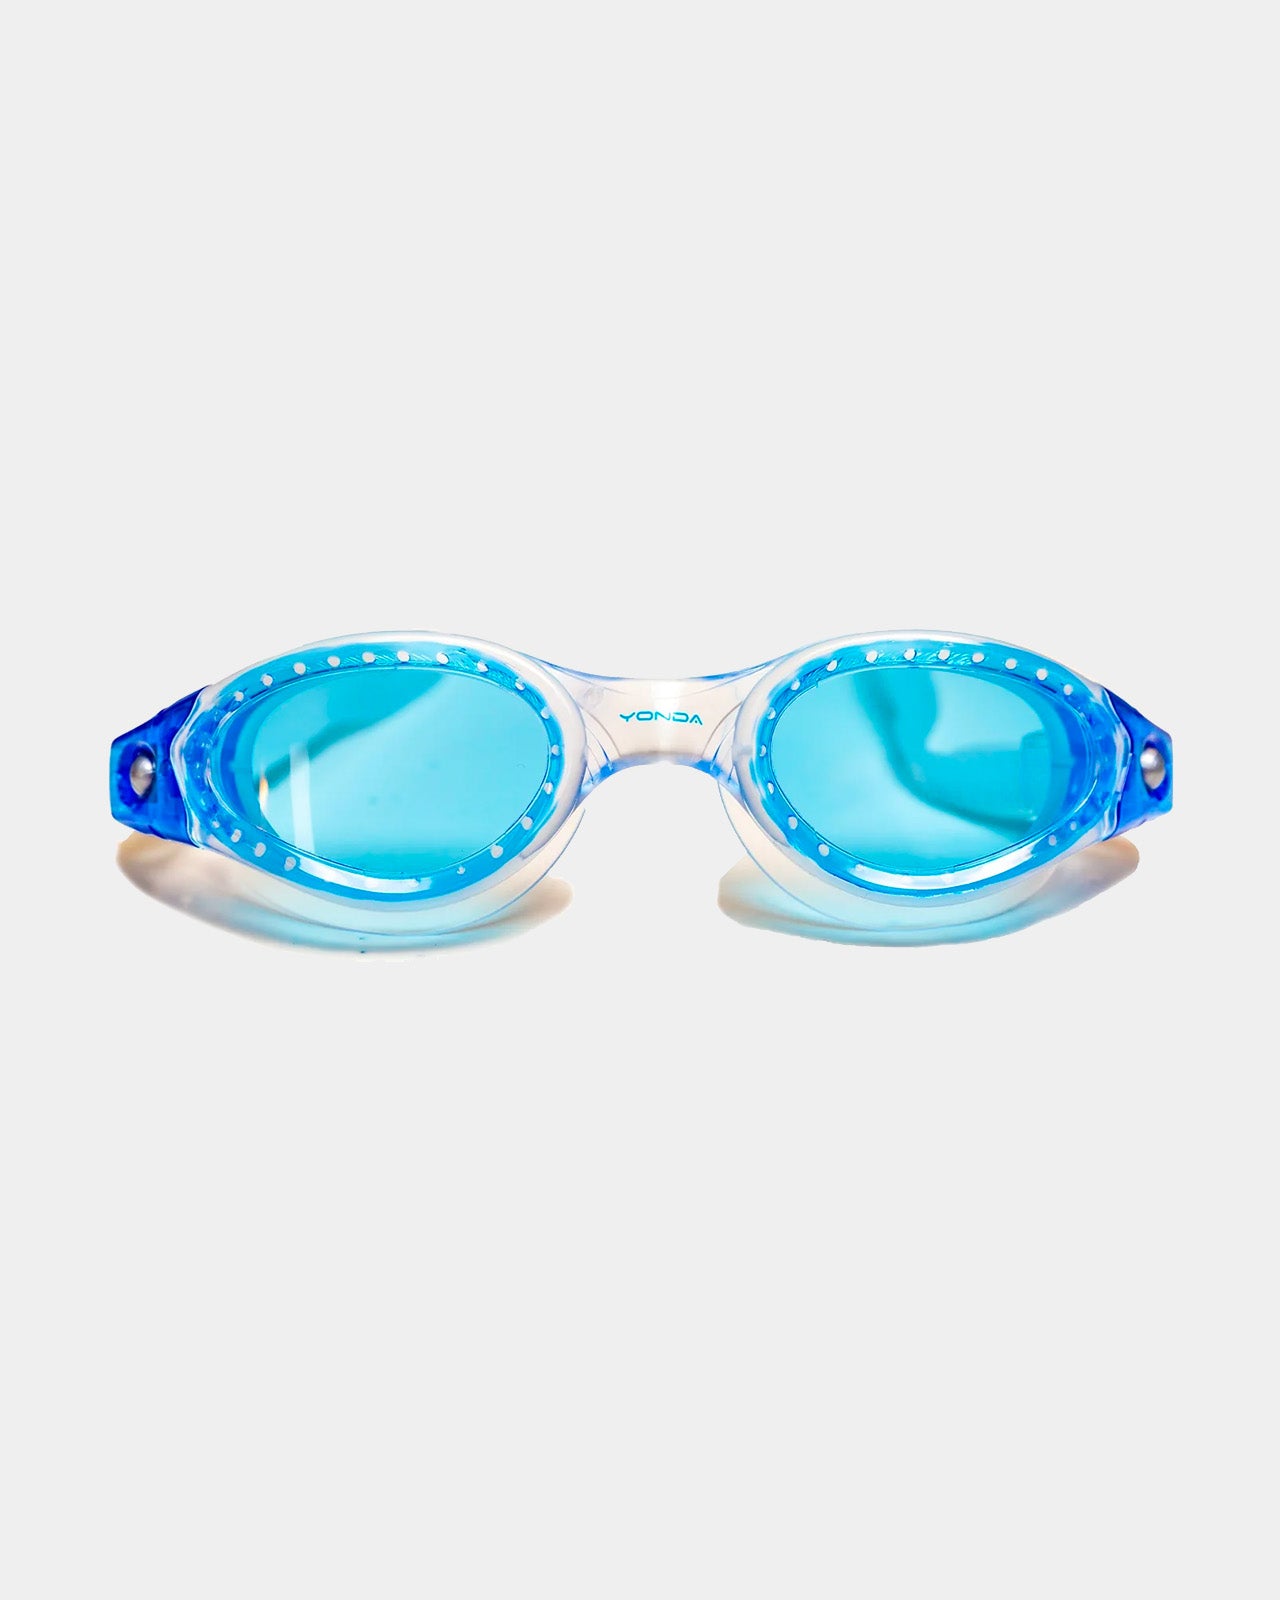 Yonda Hydroglide Blue Triathlon & Open Water Swimming Goggles